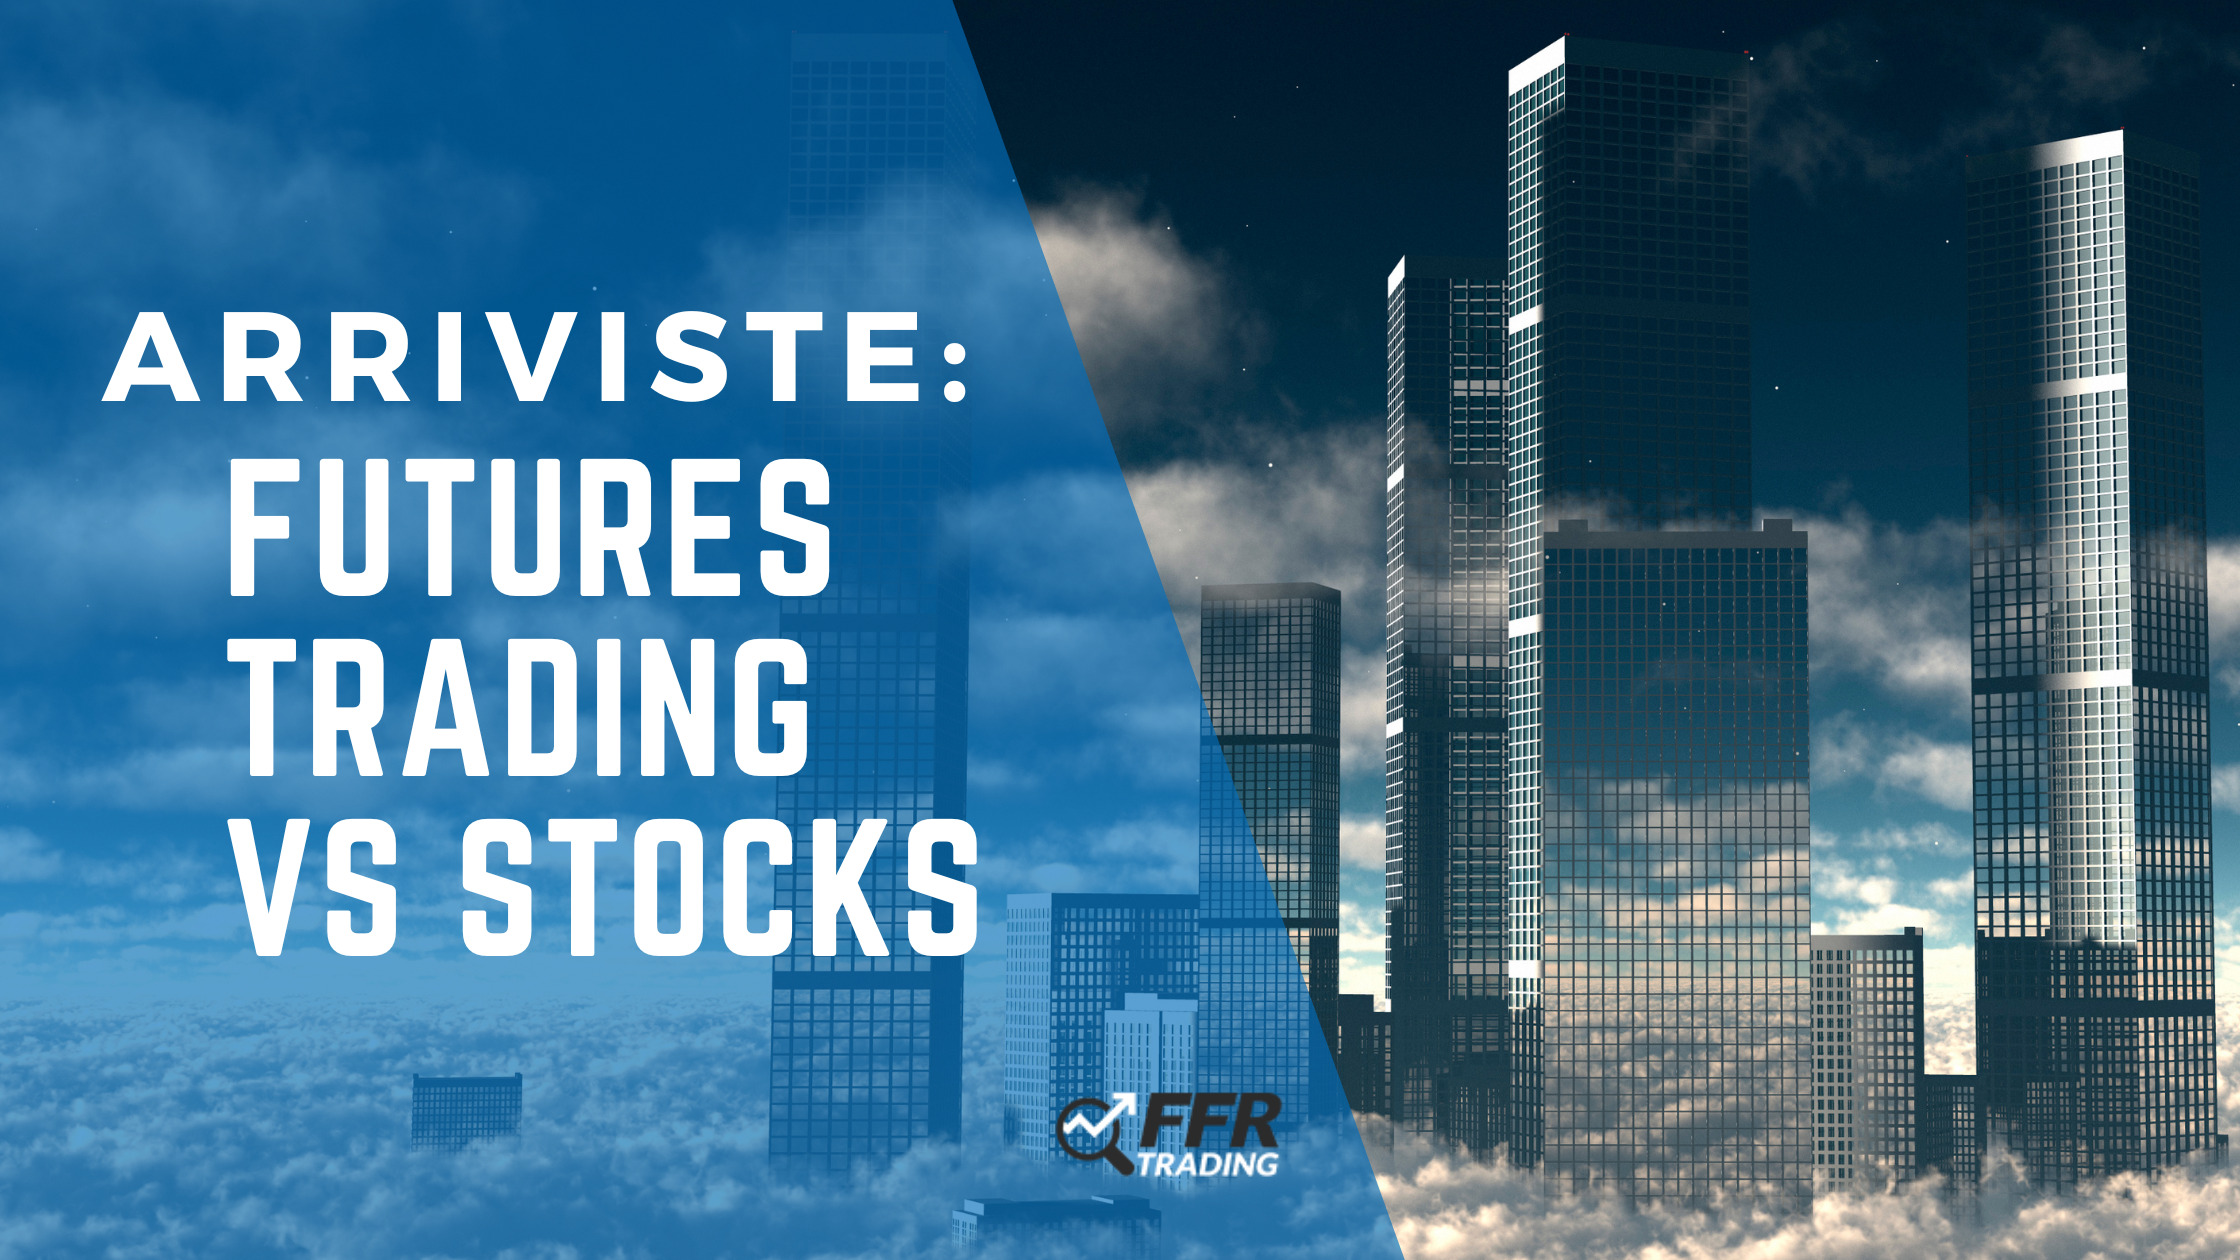 futures trading vs stocks, stock market buildings